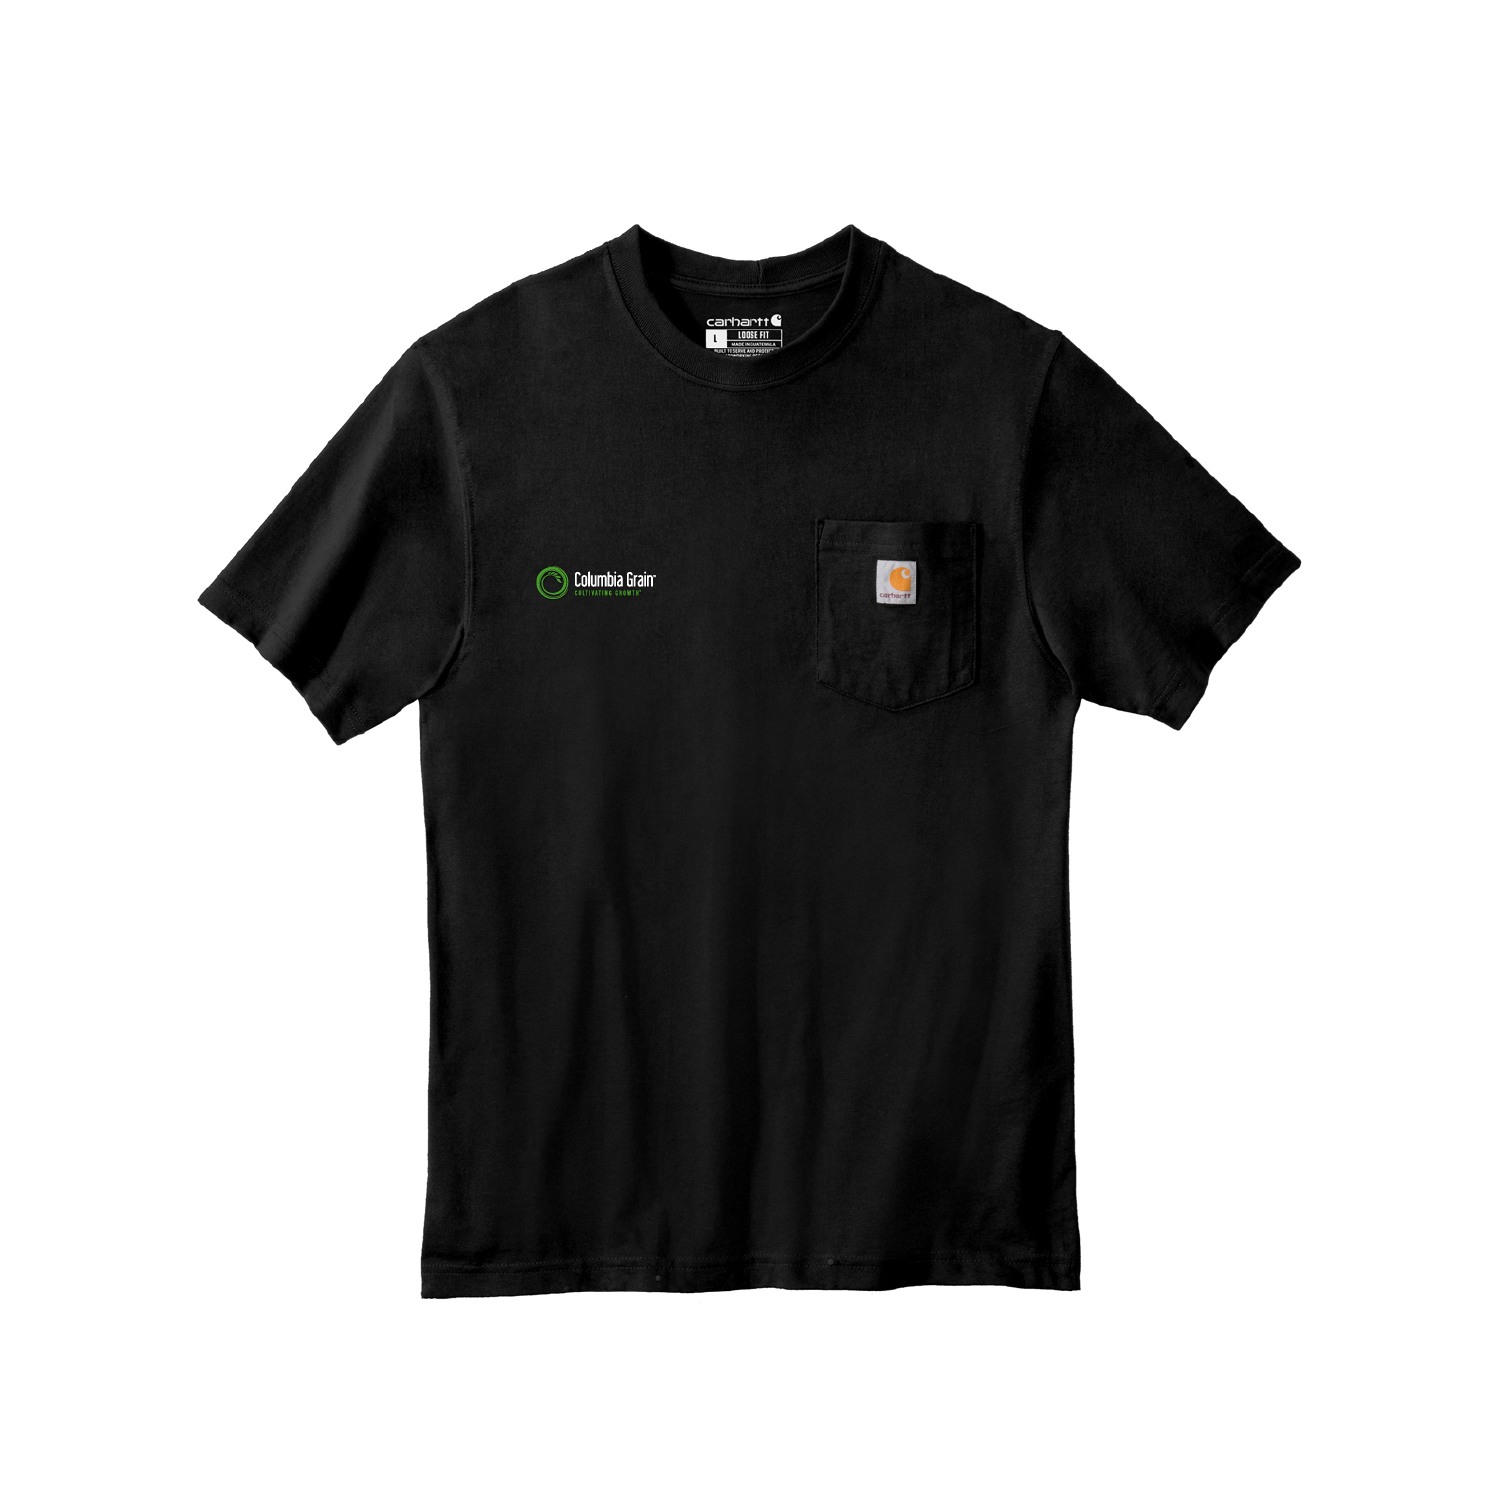 Carhartt® Workwear Pocket Short Sleeve T-Shirt - Columbia Grain